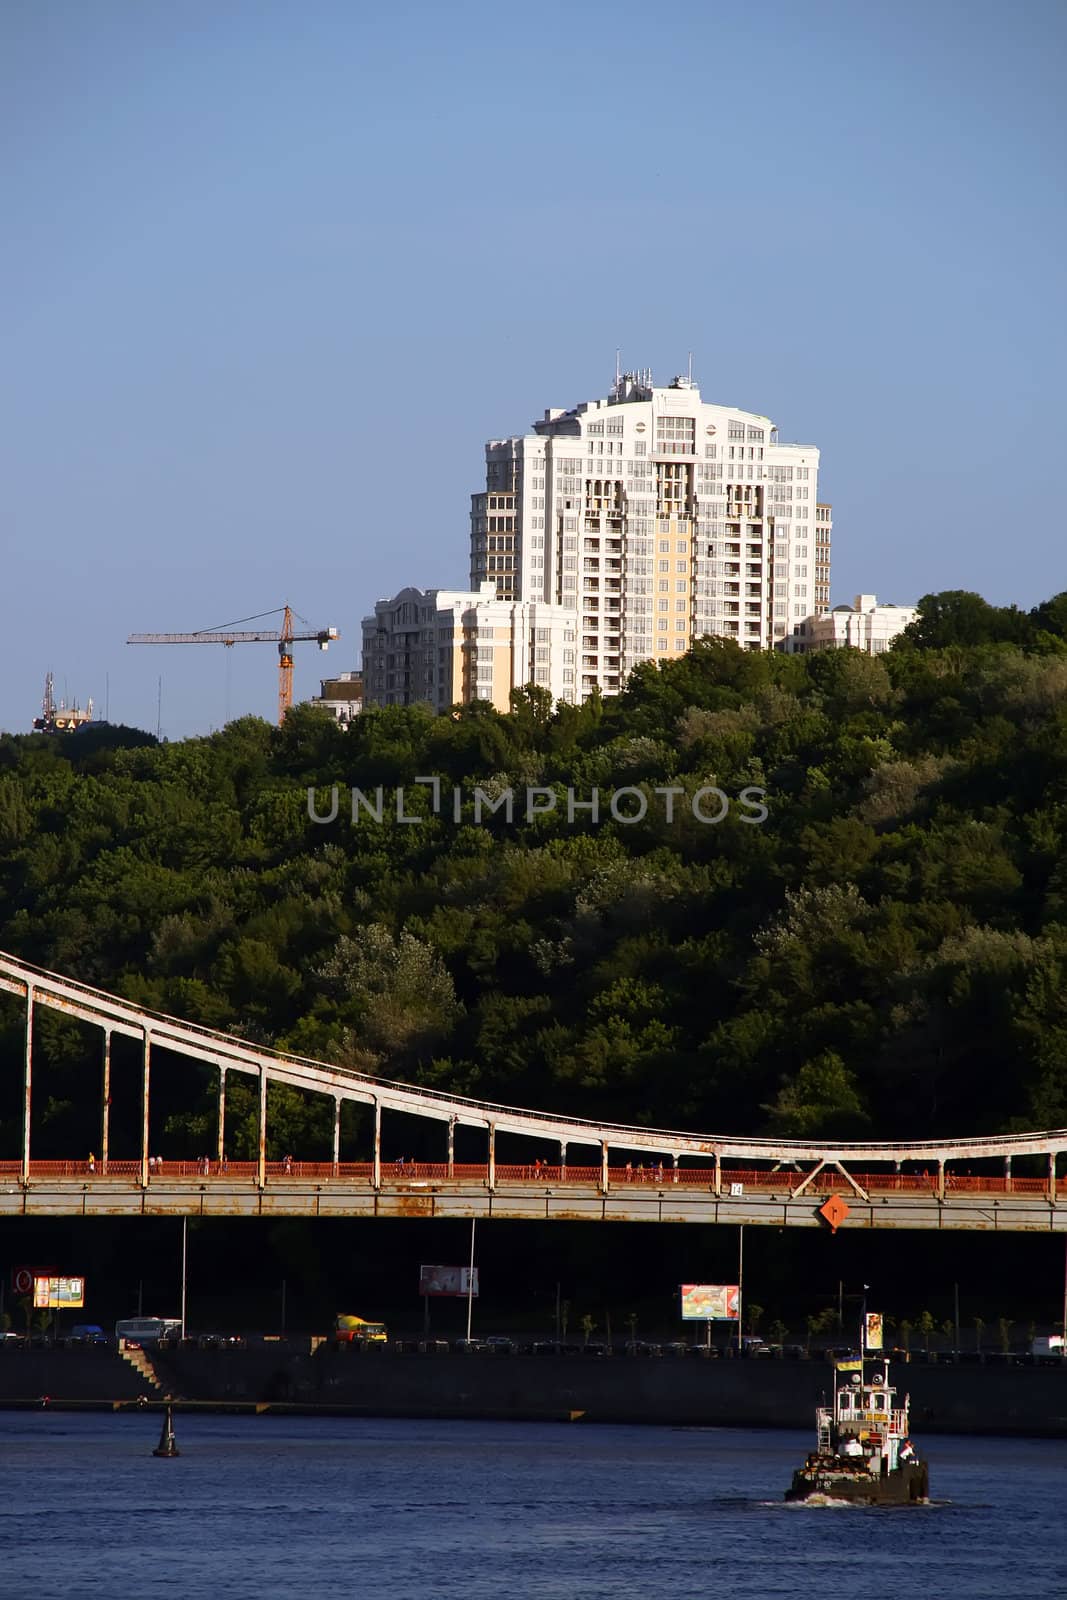 footbridge on Dnepr river. Cityscape in Kiev, Ukraine. 